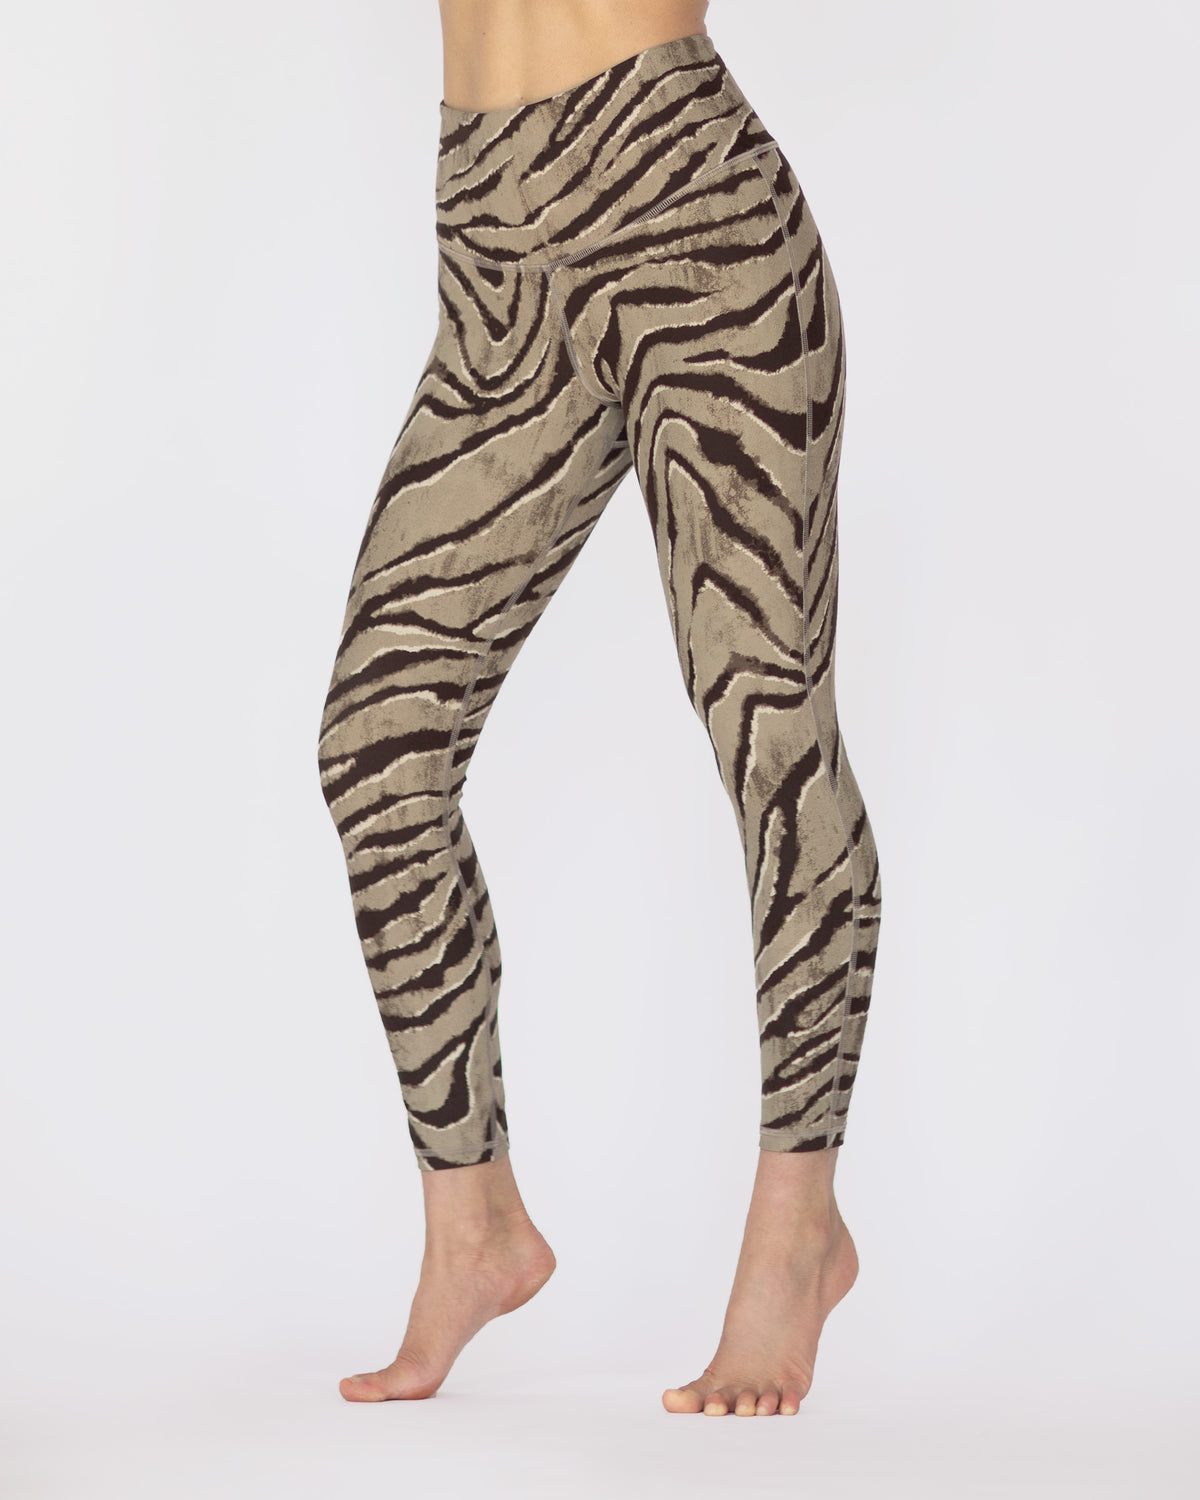 Shop the MICHI Instinct Tiger Print Legging